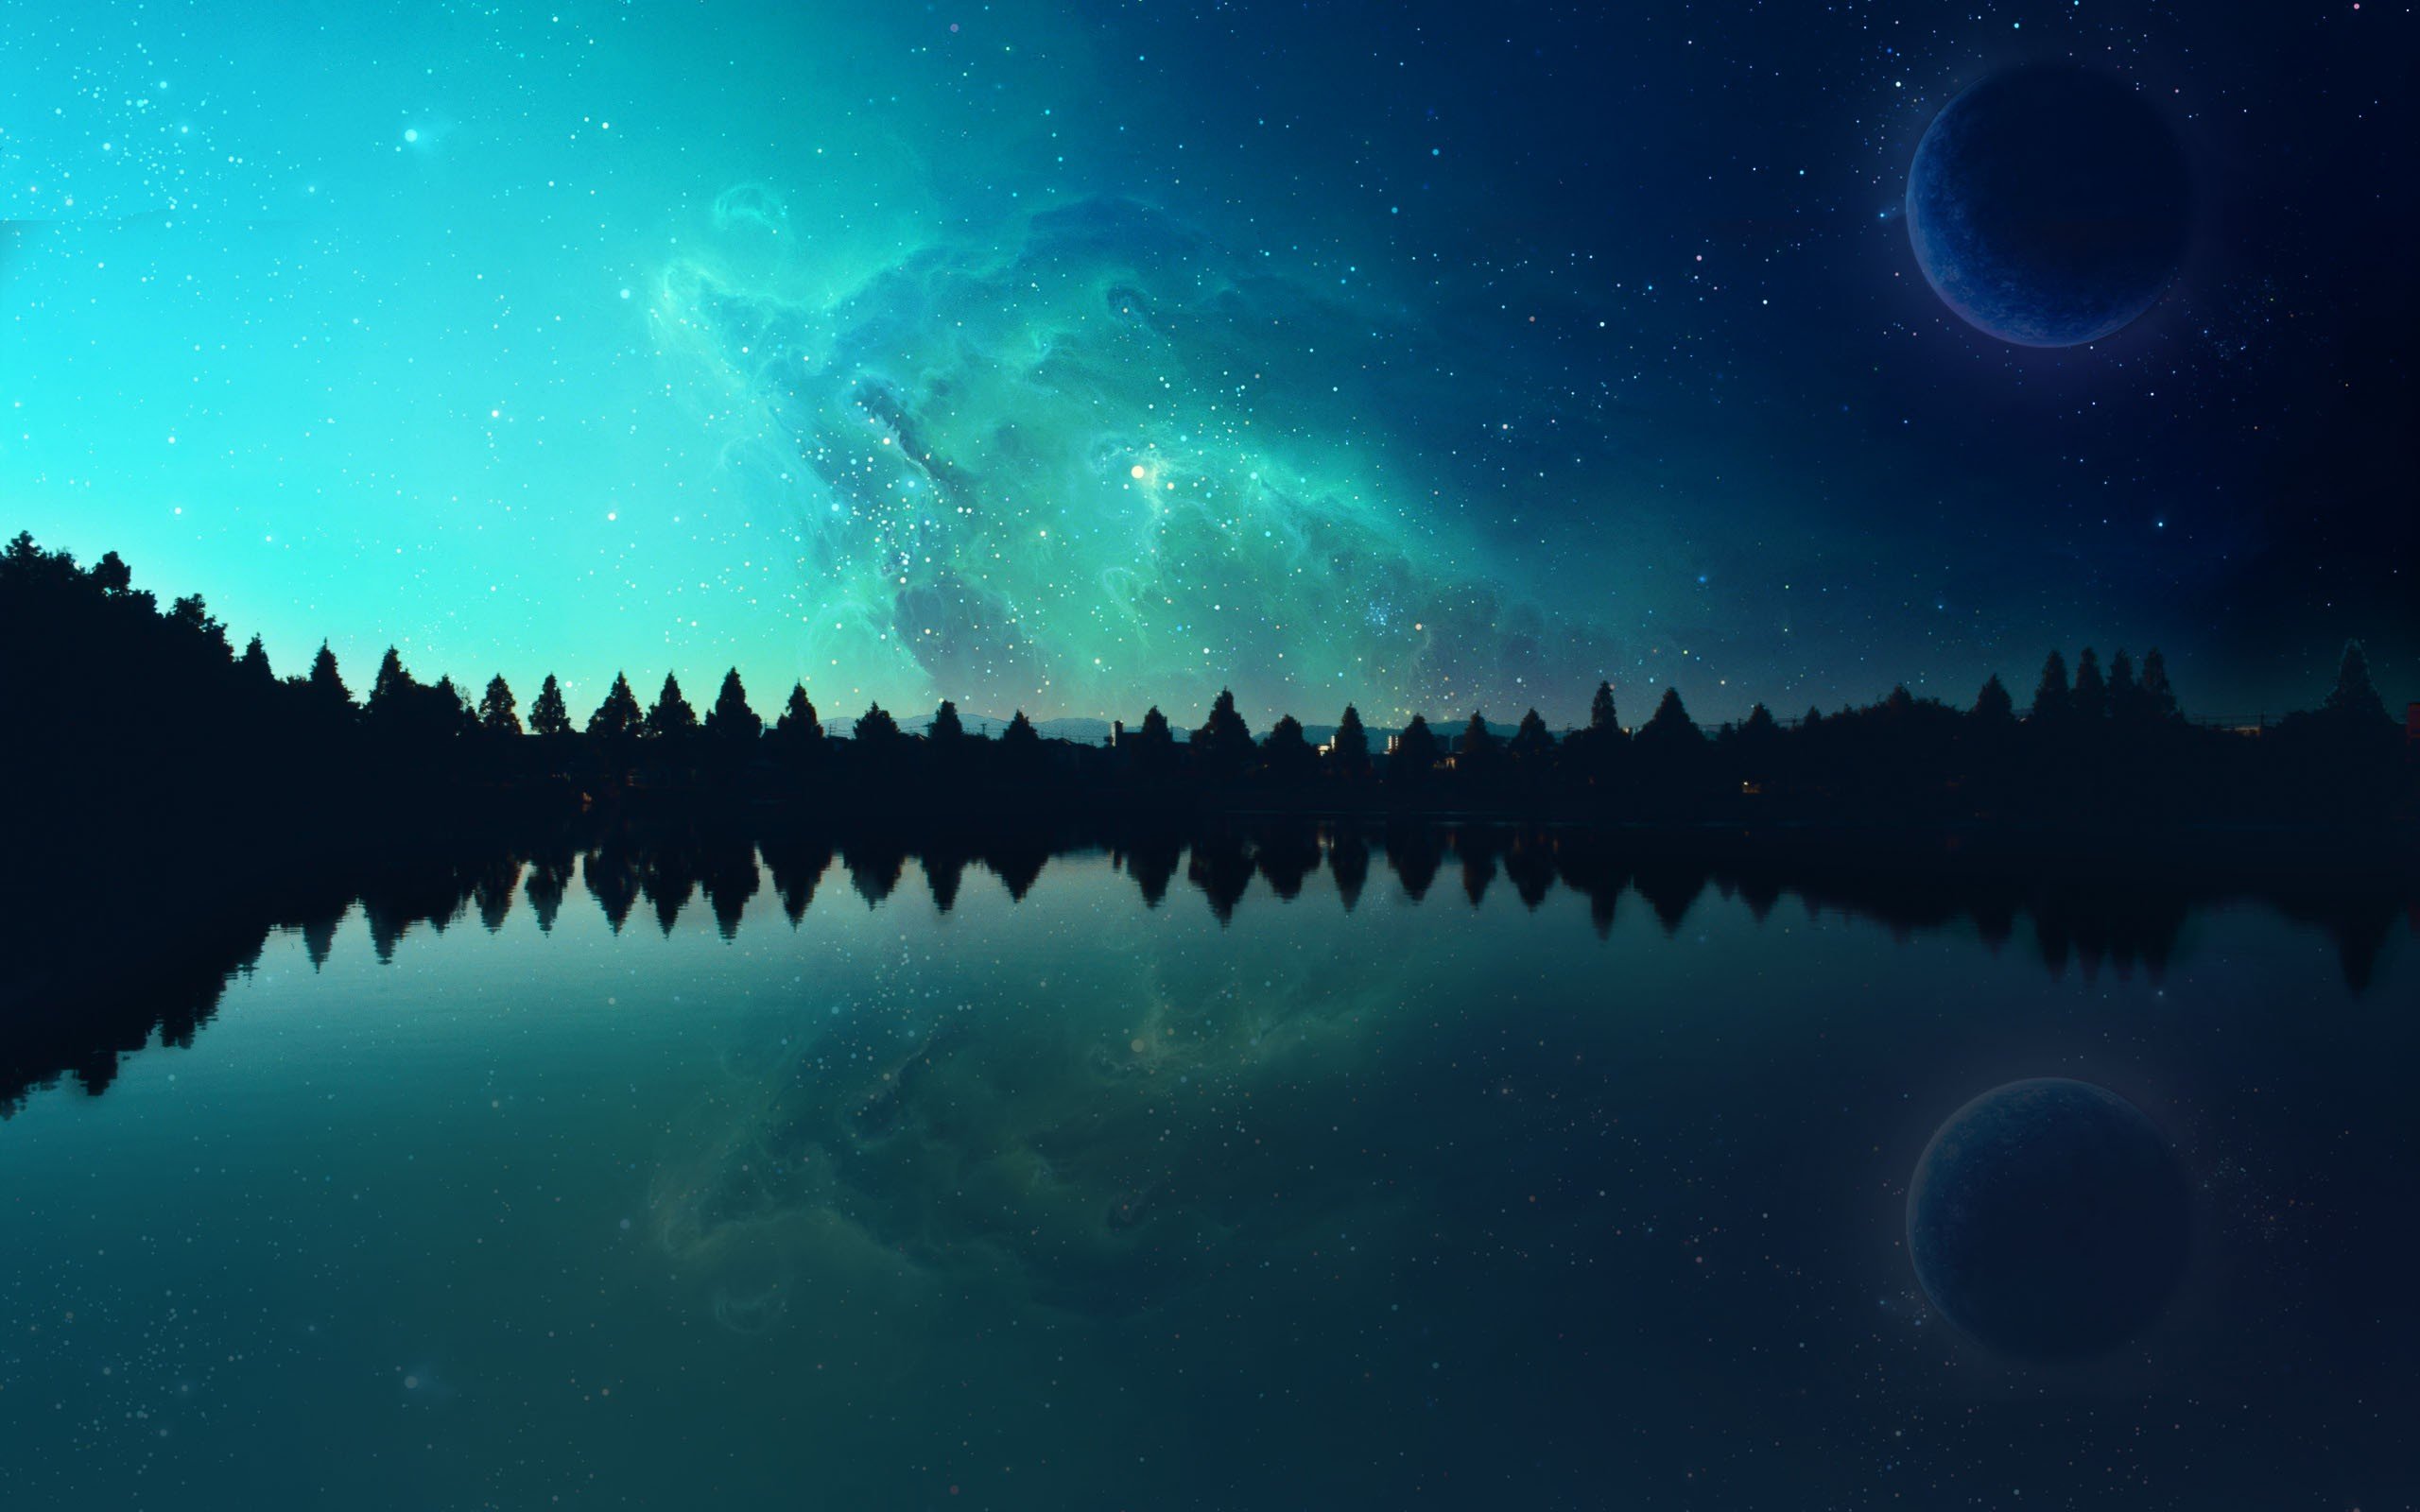 nebula, Space, Planet, Lake, Evening, Photo manipulation Wallpaper